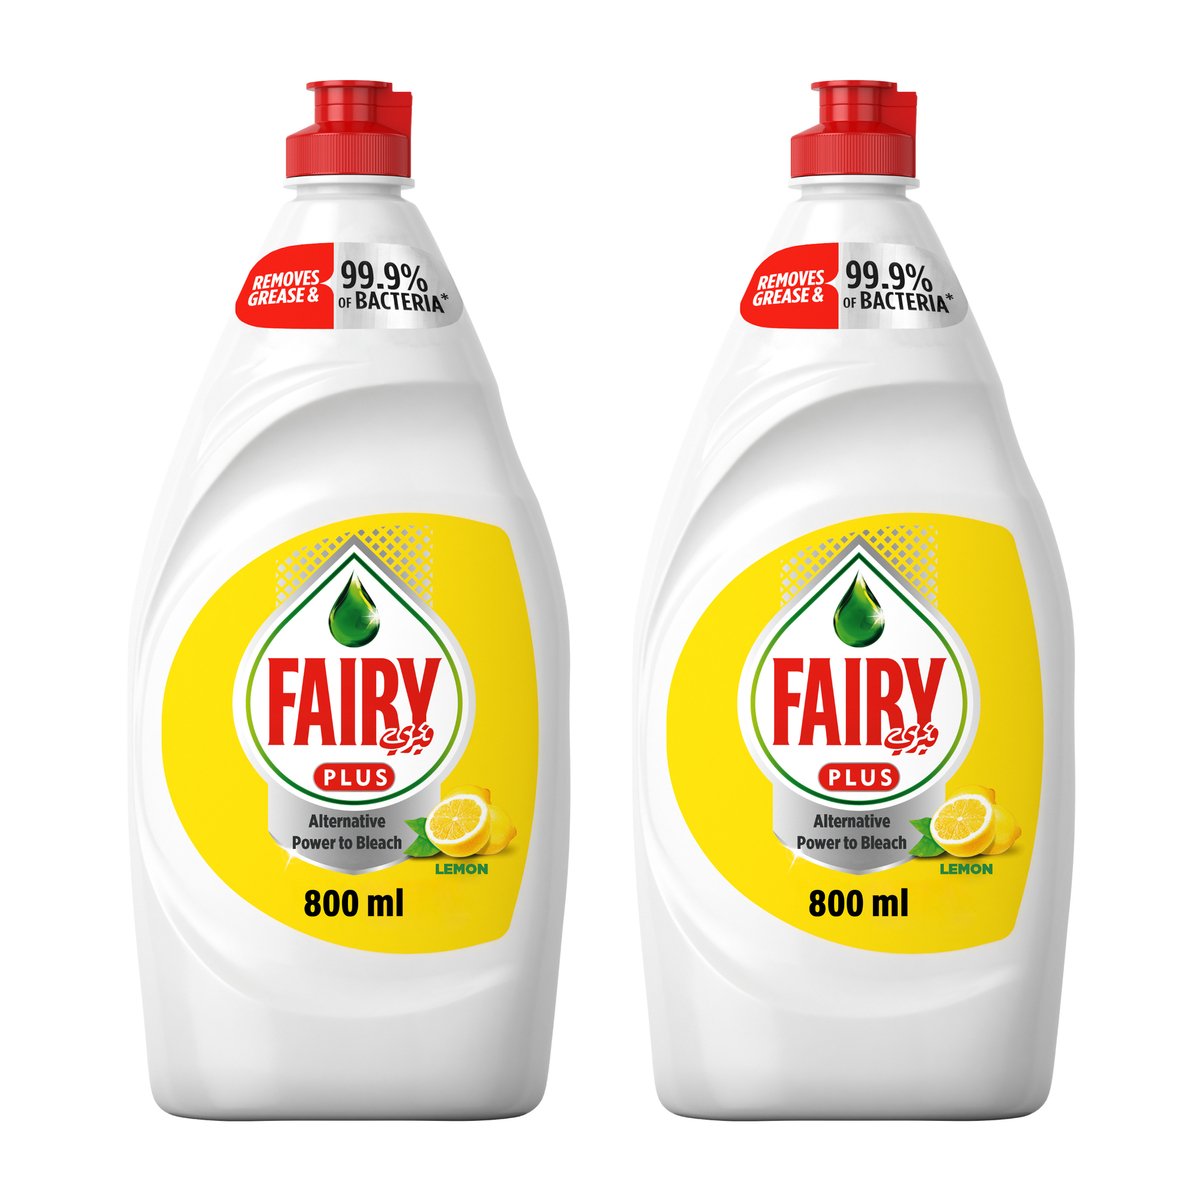 Fairy Plus Lemon Dishwashing Liquid Soap With Alternative Power To Bleach 2 x 800 ml